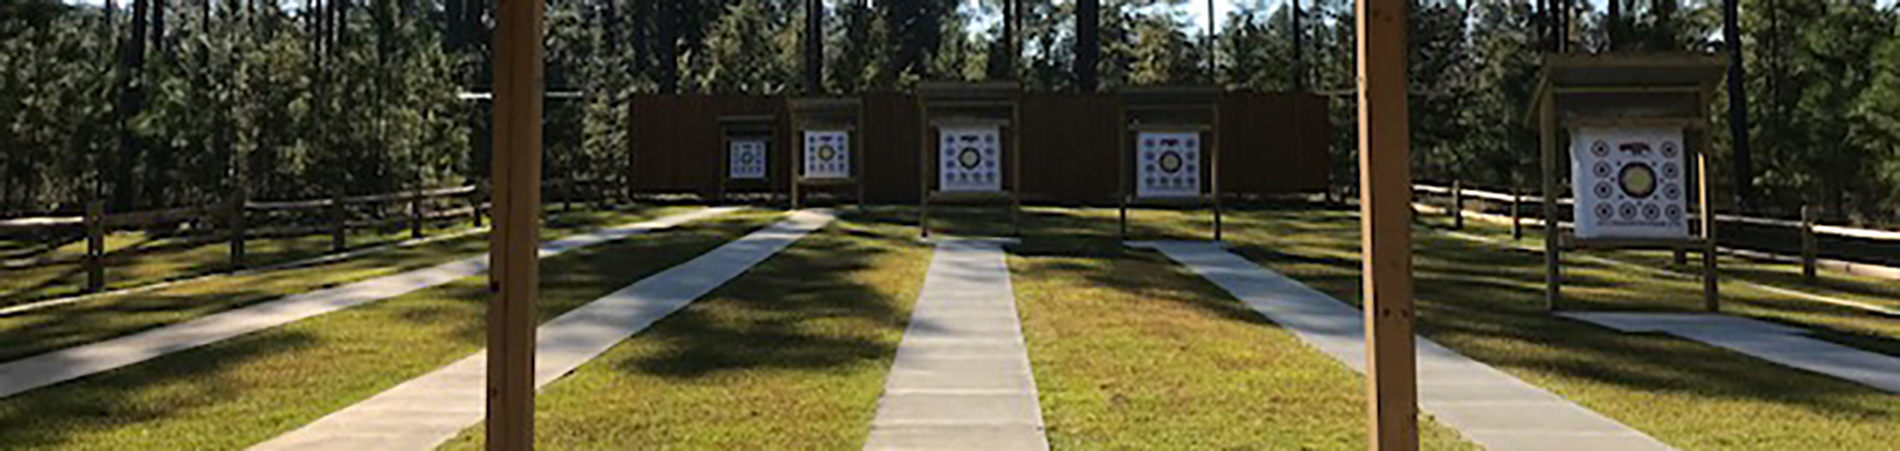 Archery Range Under Cover